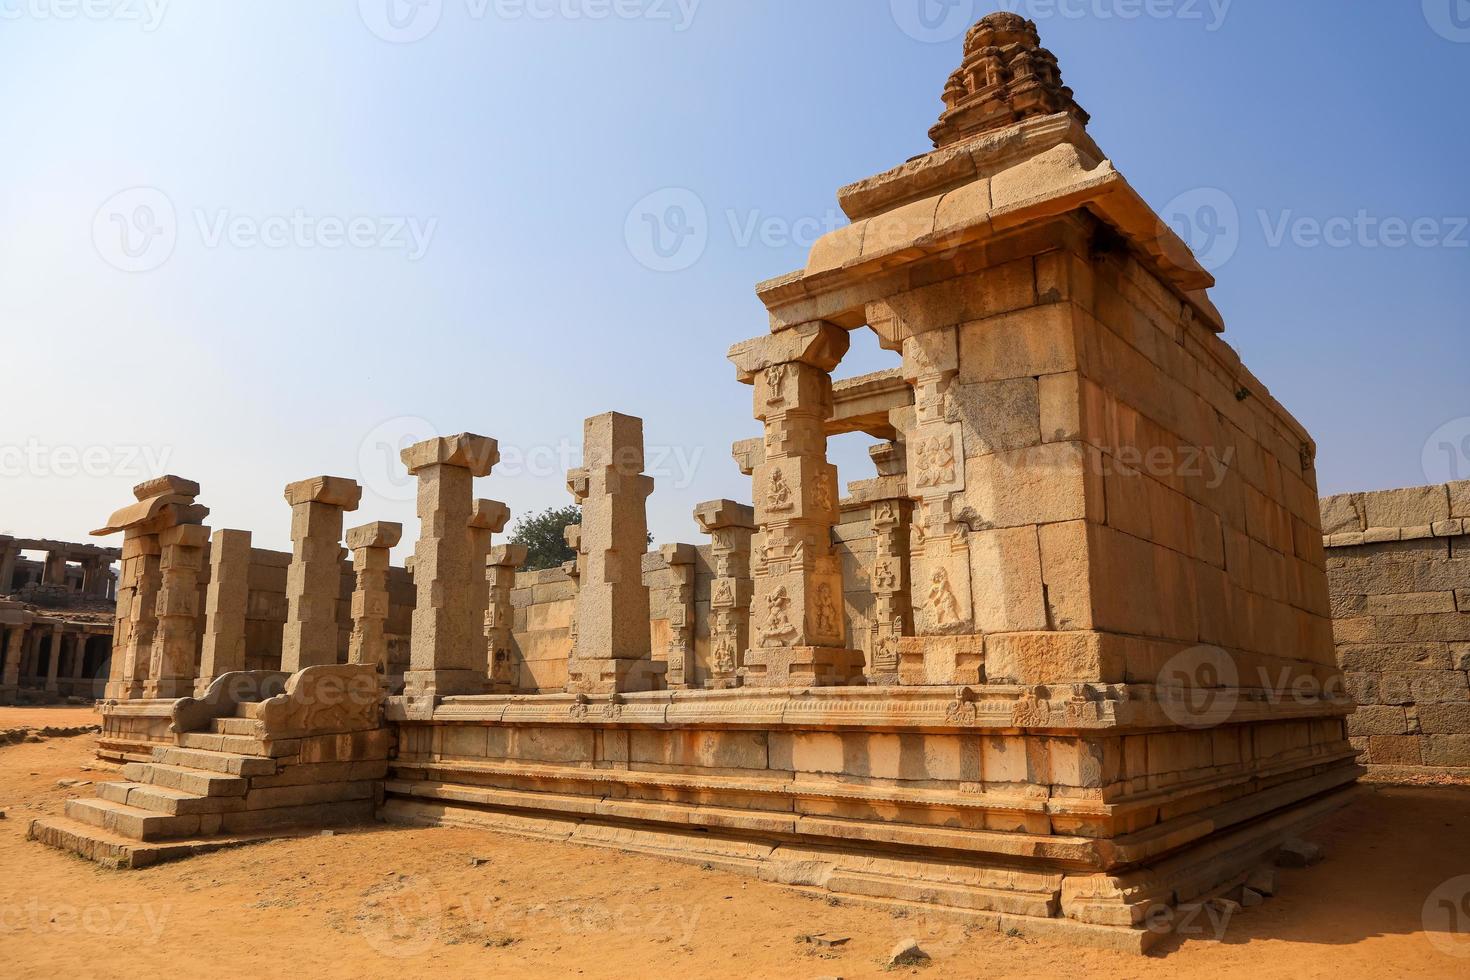 architectuur van ruïnes hampi in karanataka staat Indië, wereld erfgoed plaats foto